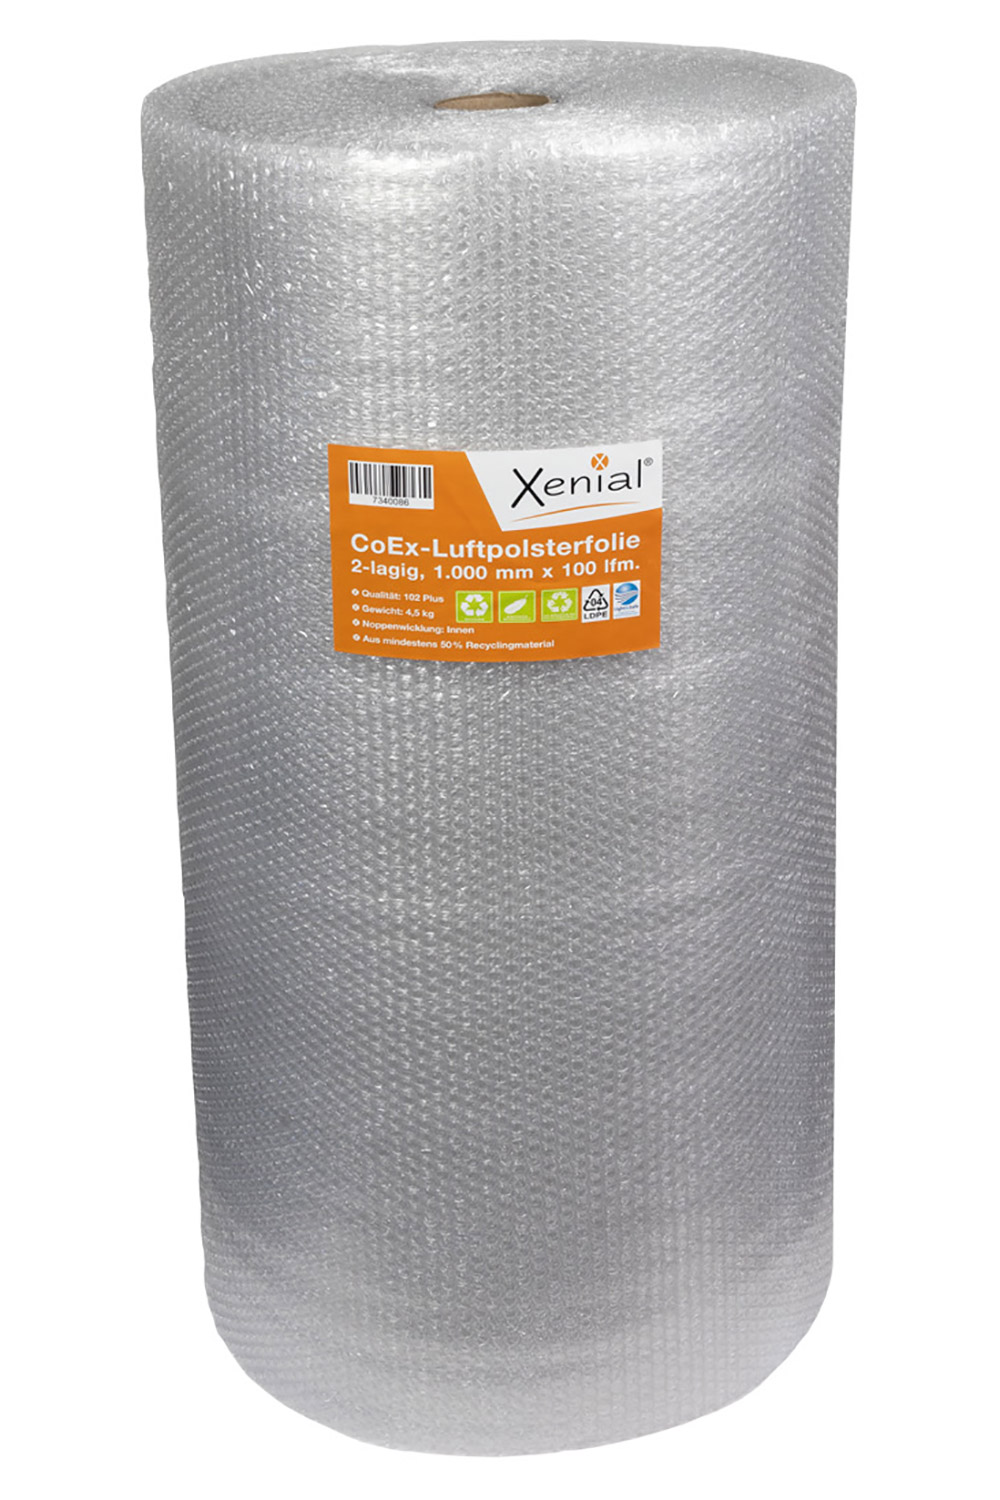 XENIAL CoEx-Luftpolsterfolie, 1000mm breitx100lfm, 50µ, grau, 2-lagig, mit mind. 50% Recyclinganteil | VE = 1 Stk.